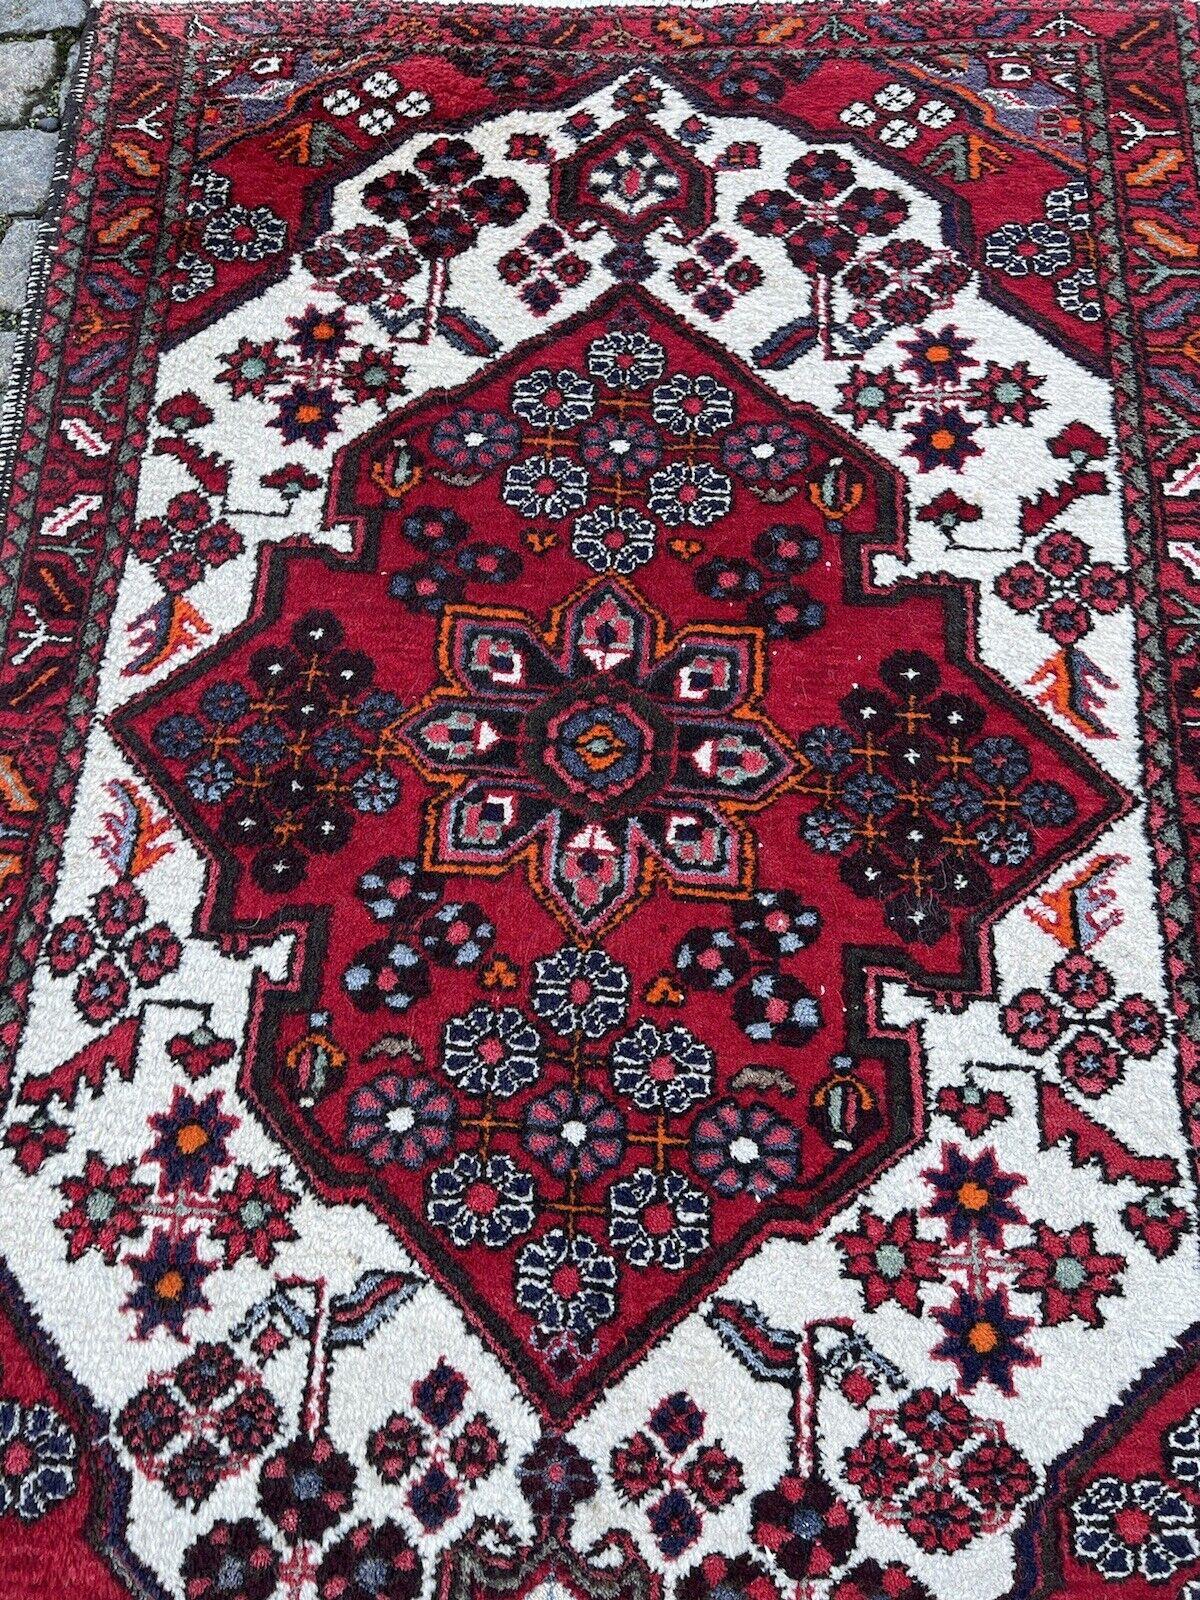 Late 20th Century Handmade Vintage Persian Style Hamadan Rug 3.4' x 5.2', 1970s - 1S65 For Sale